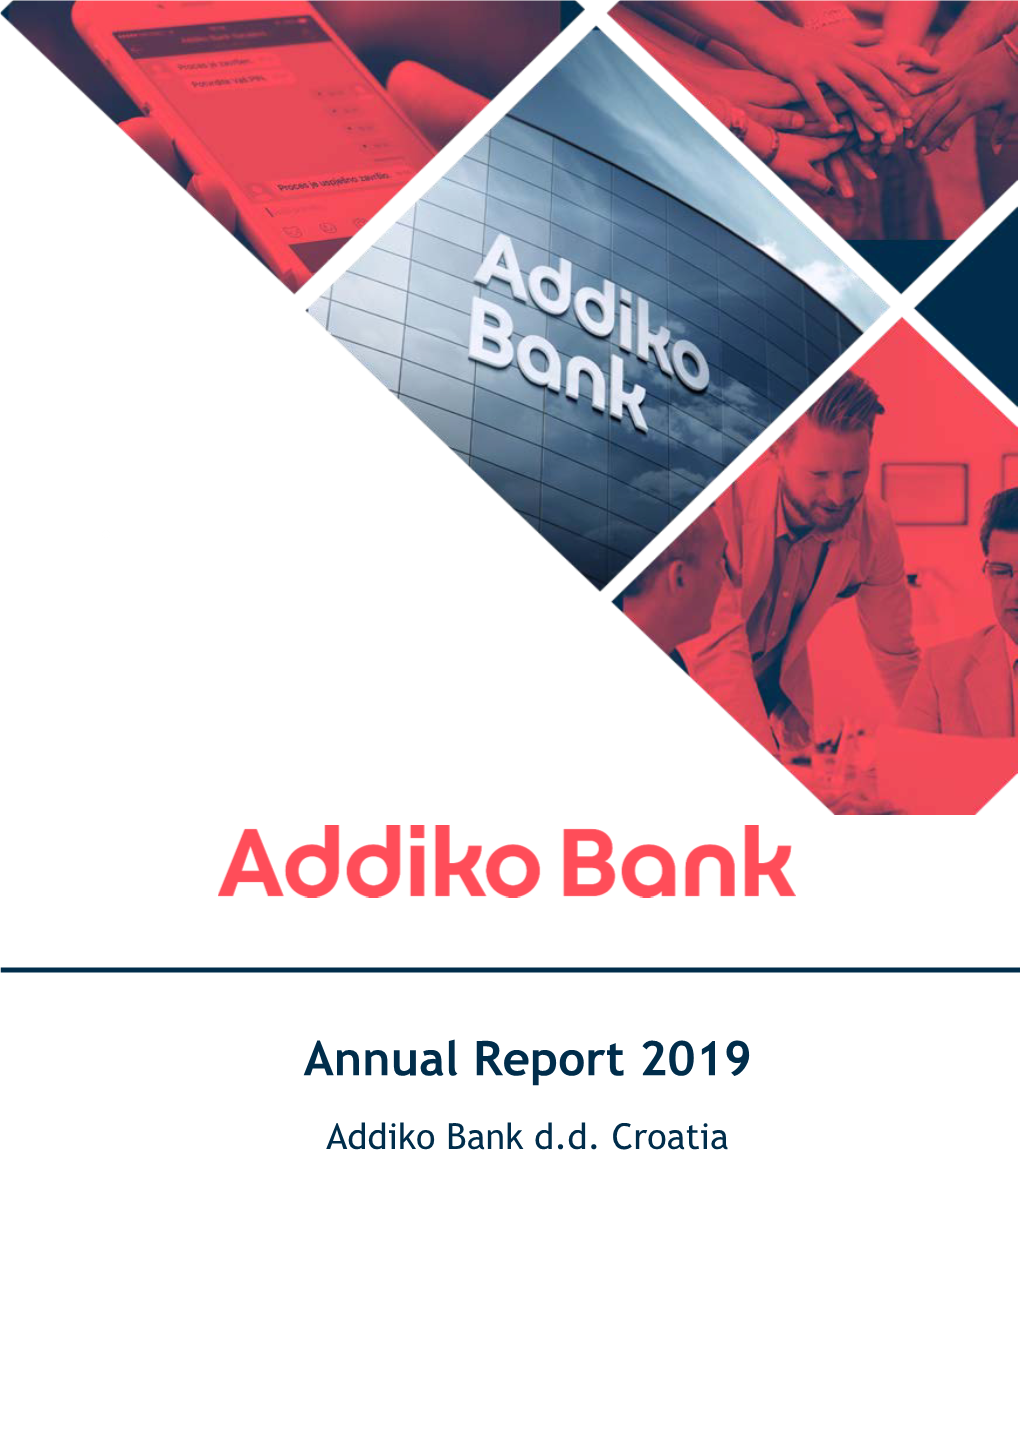 Annual Report 2019 Addiko Bank D.D